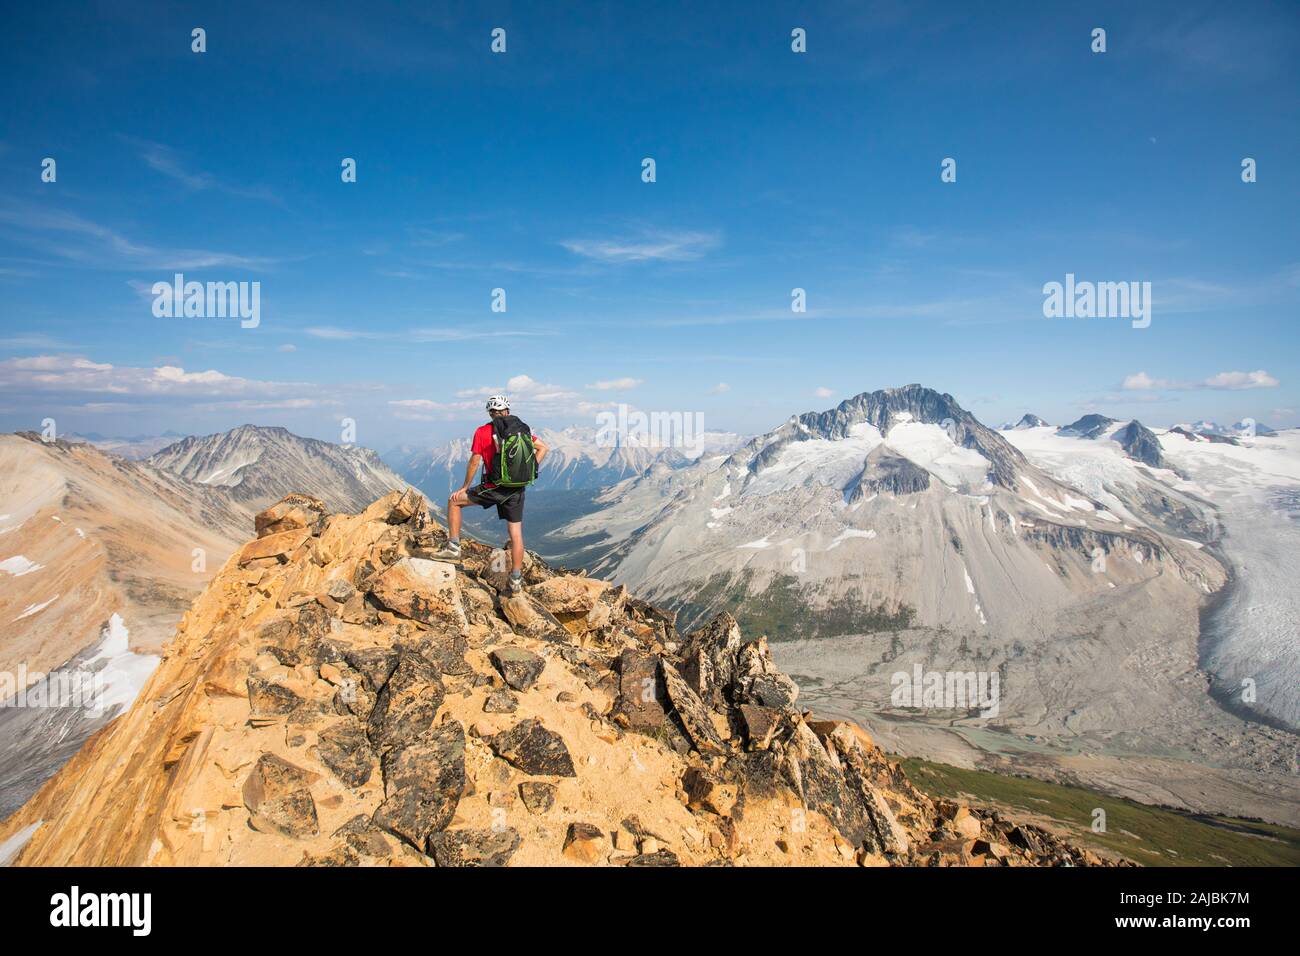 Backpacker standing on mountain summit. Stock Photo